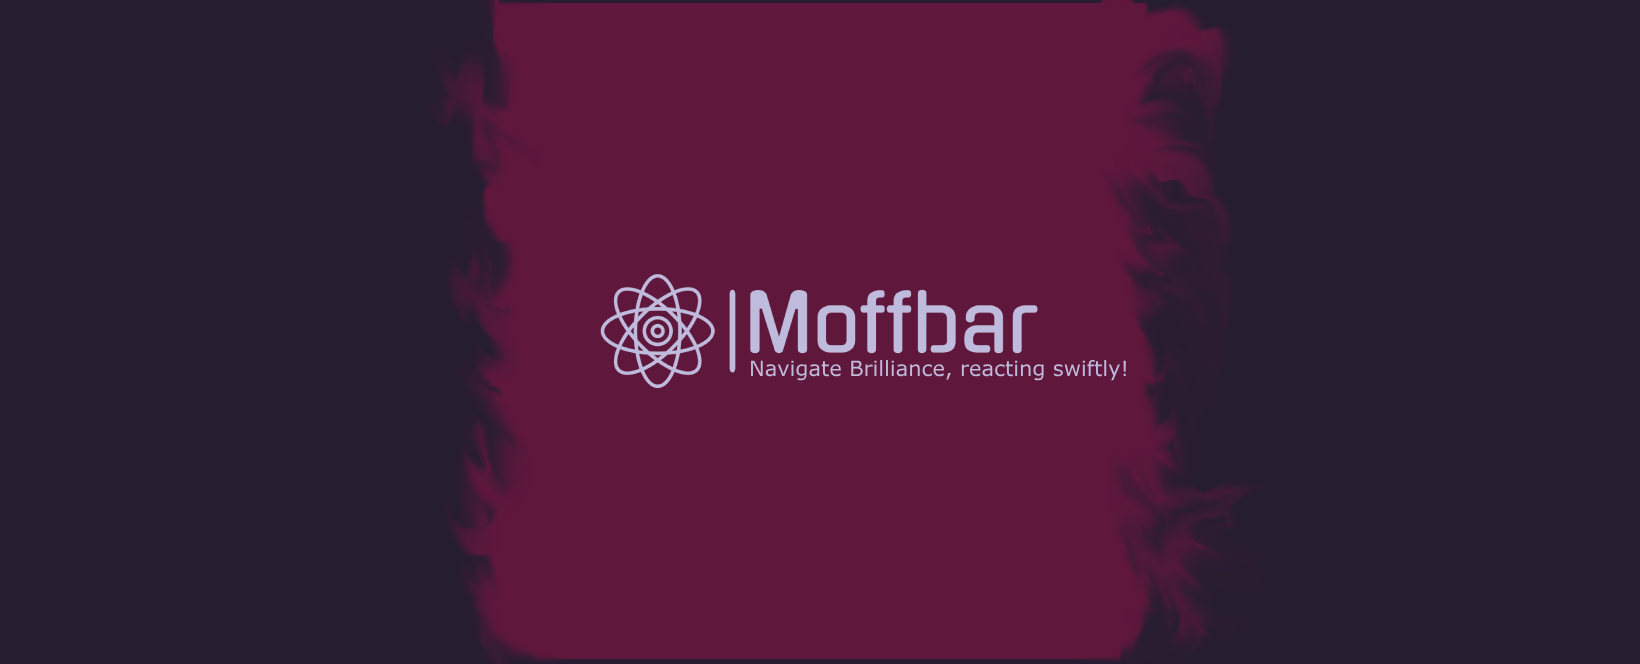 Moffbar